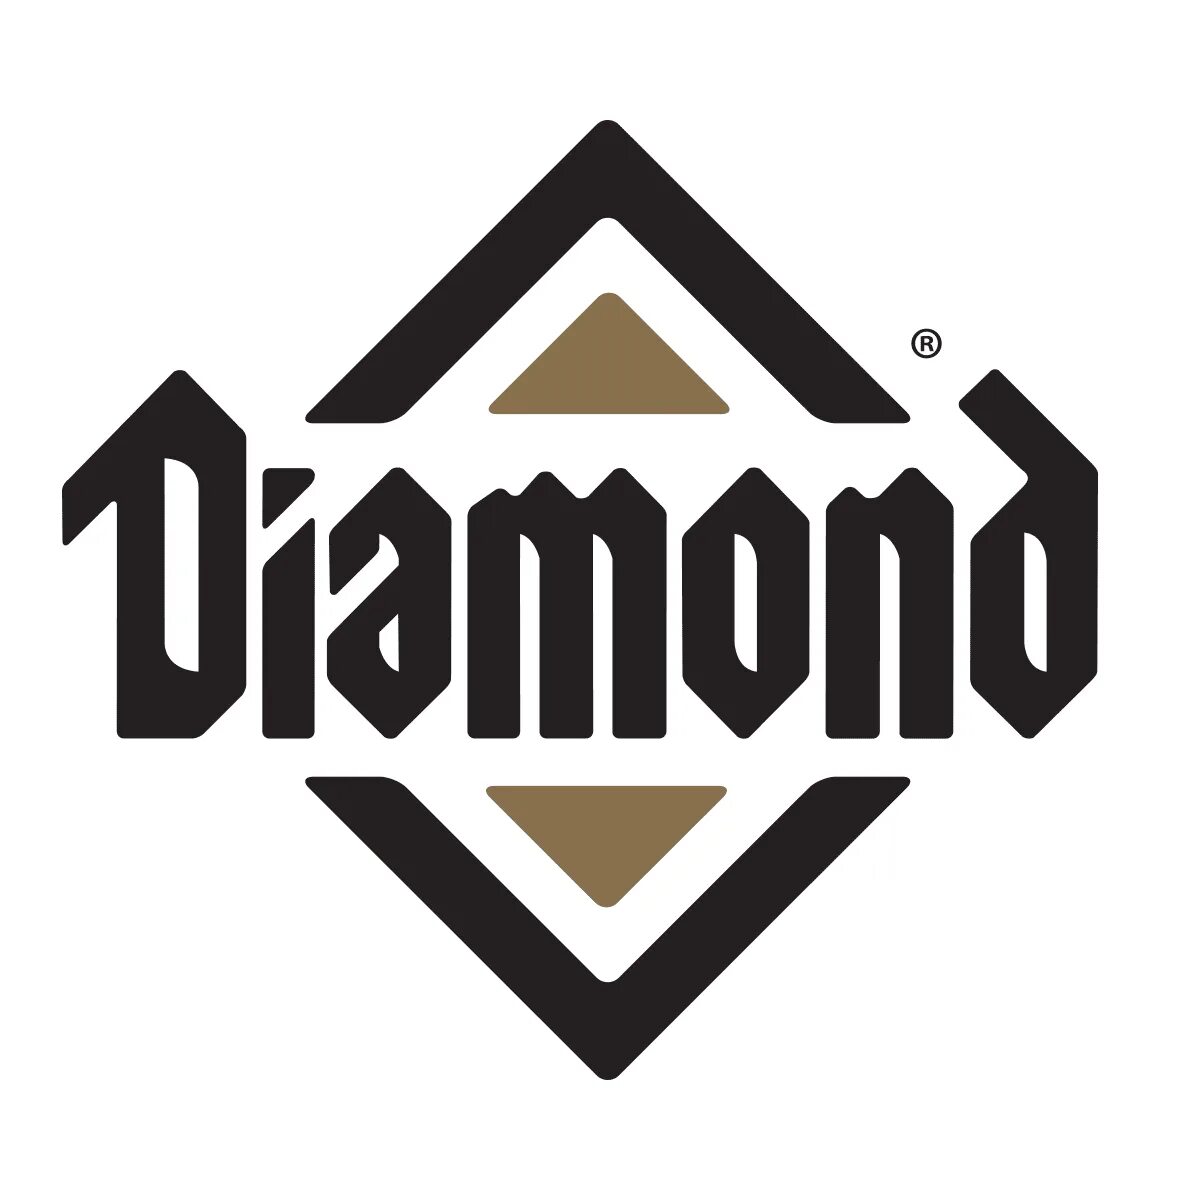 Diamond pet. Diamond Vogel логотип. Diafarm логотип. Diamond Rp старый логотип.